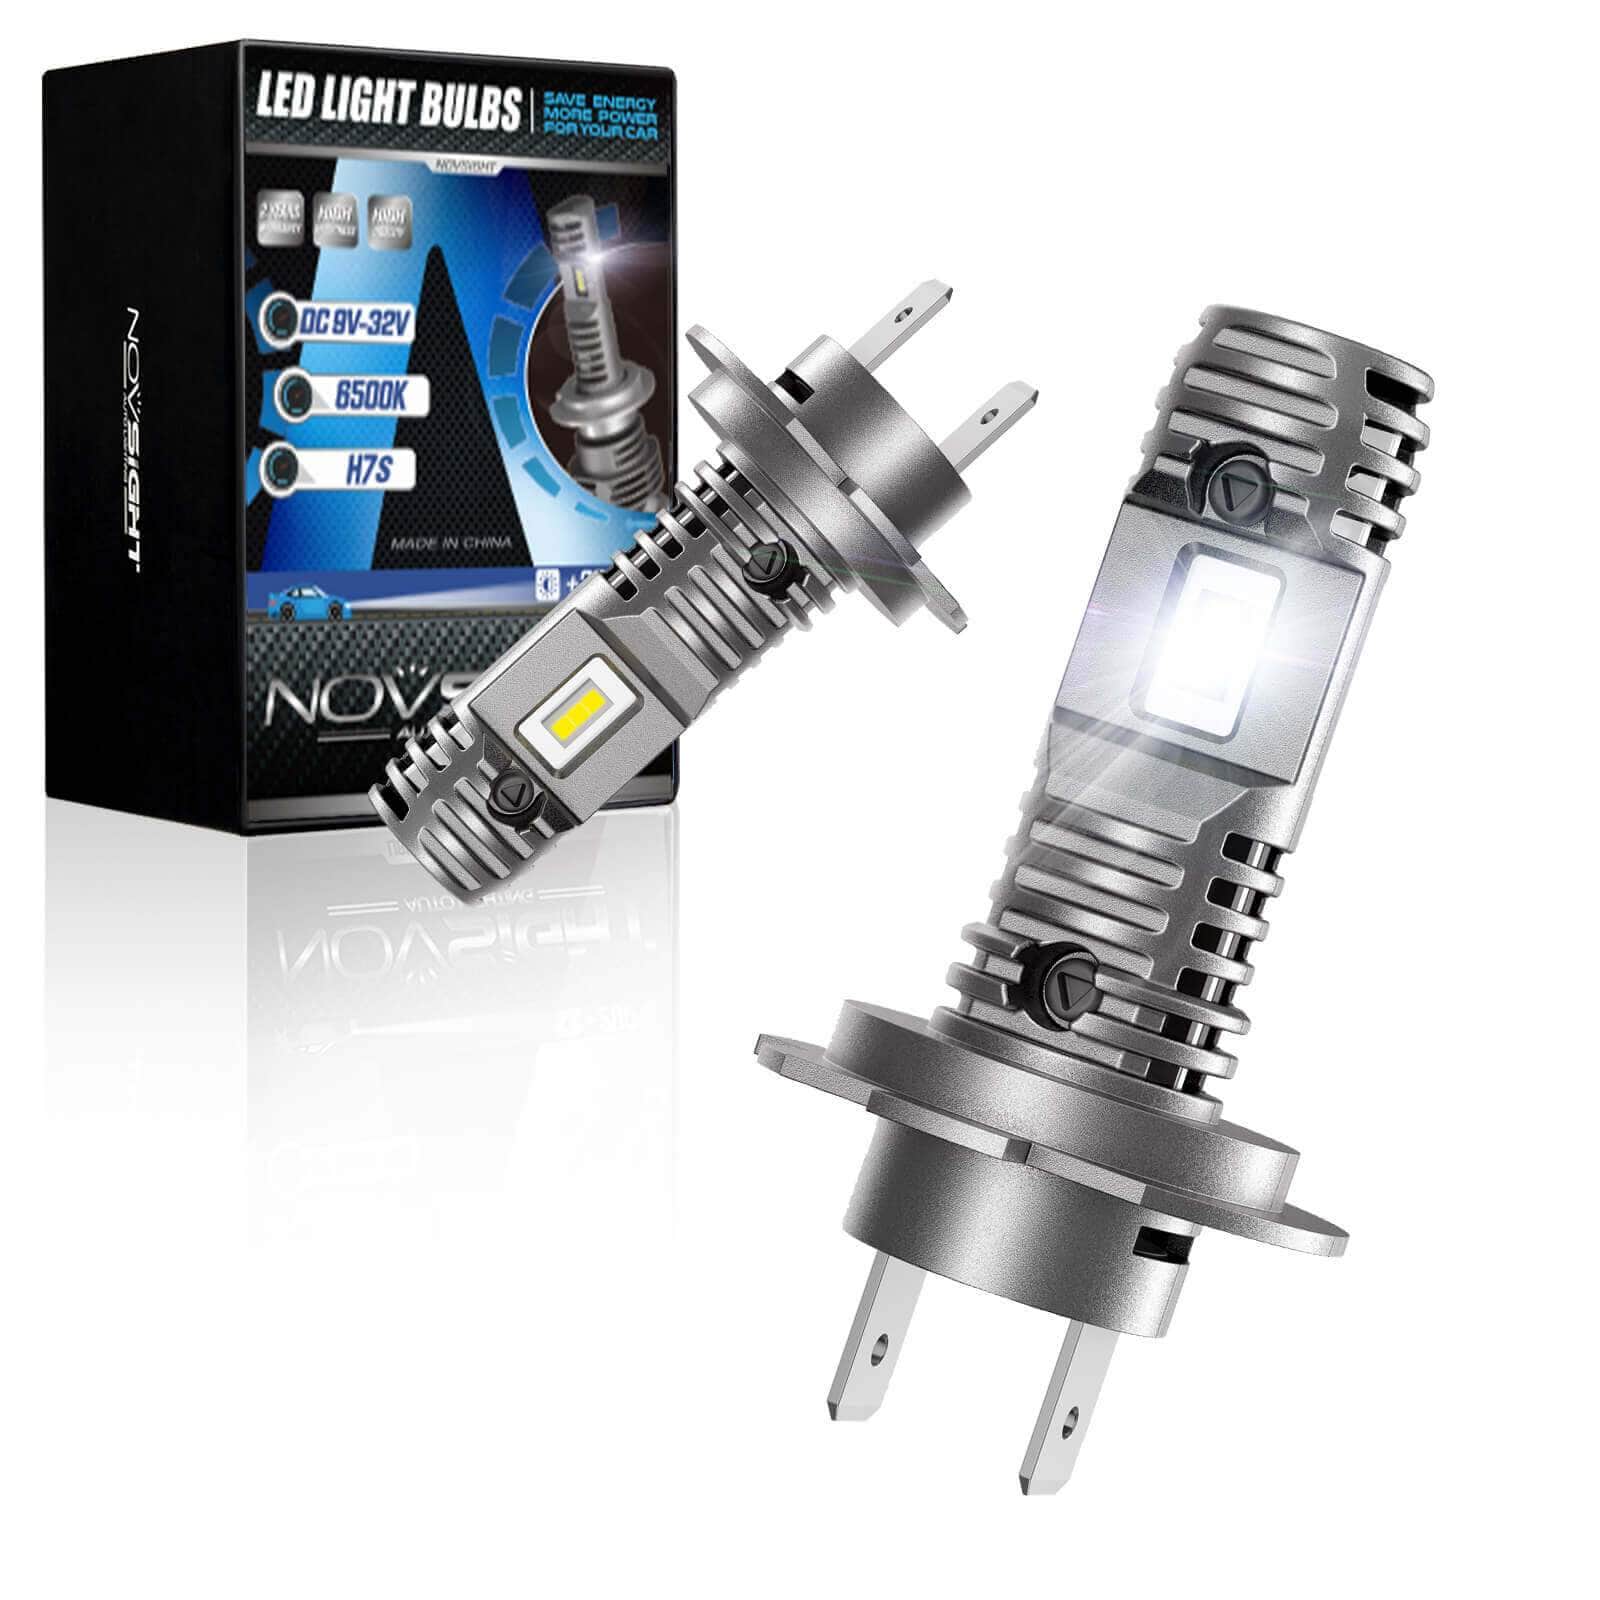 H7 LED Headlight Bulbs Mini Size Wireless Lumens Fanless│Novsight